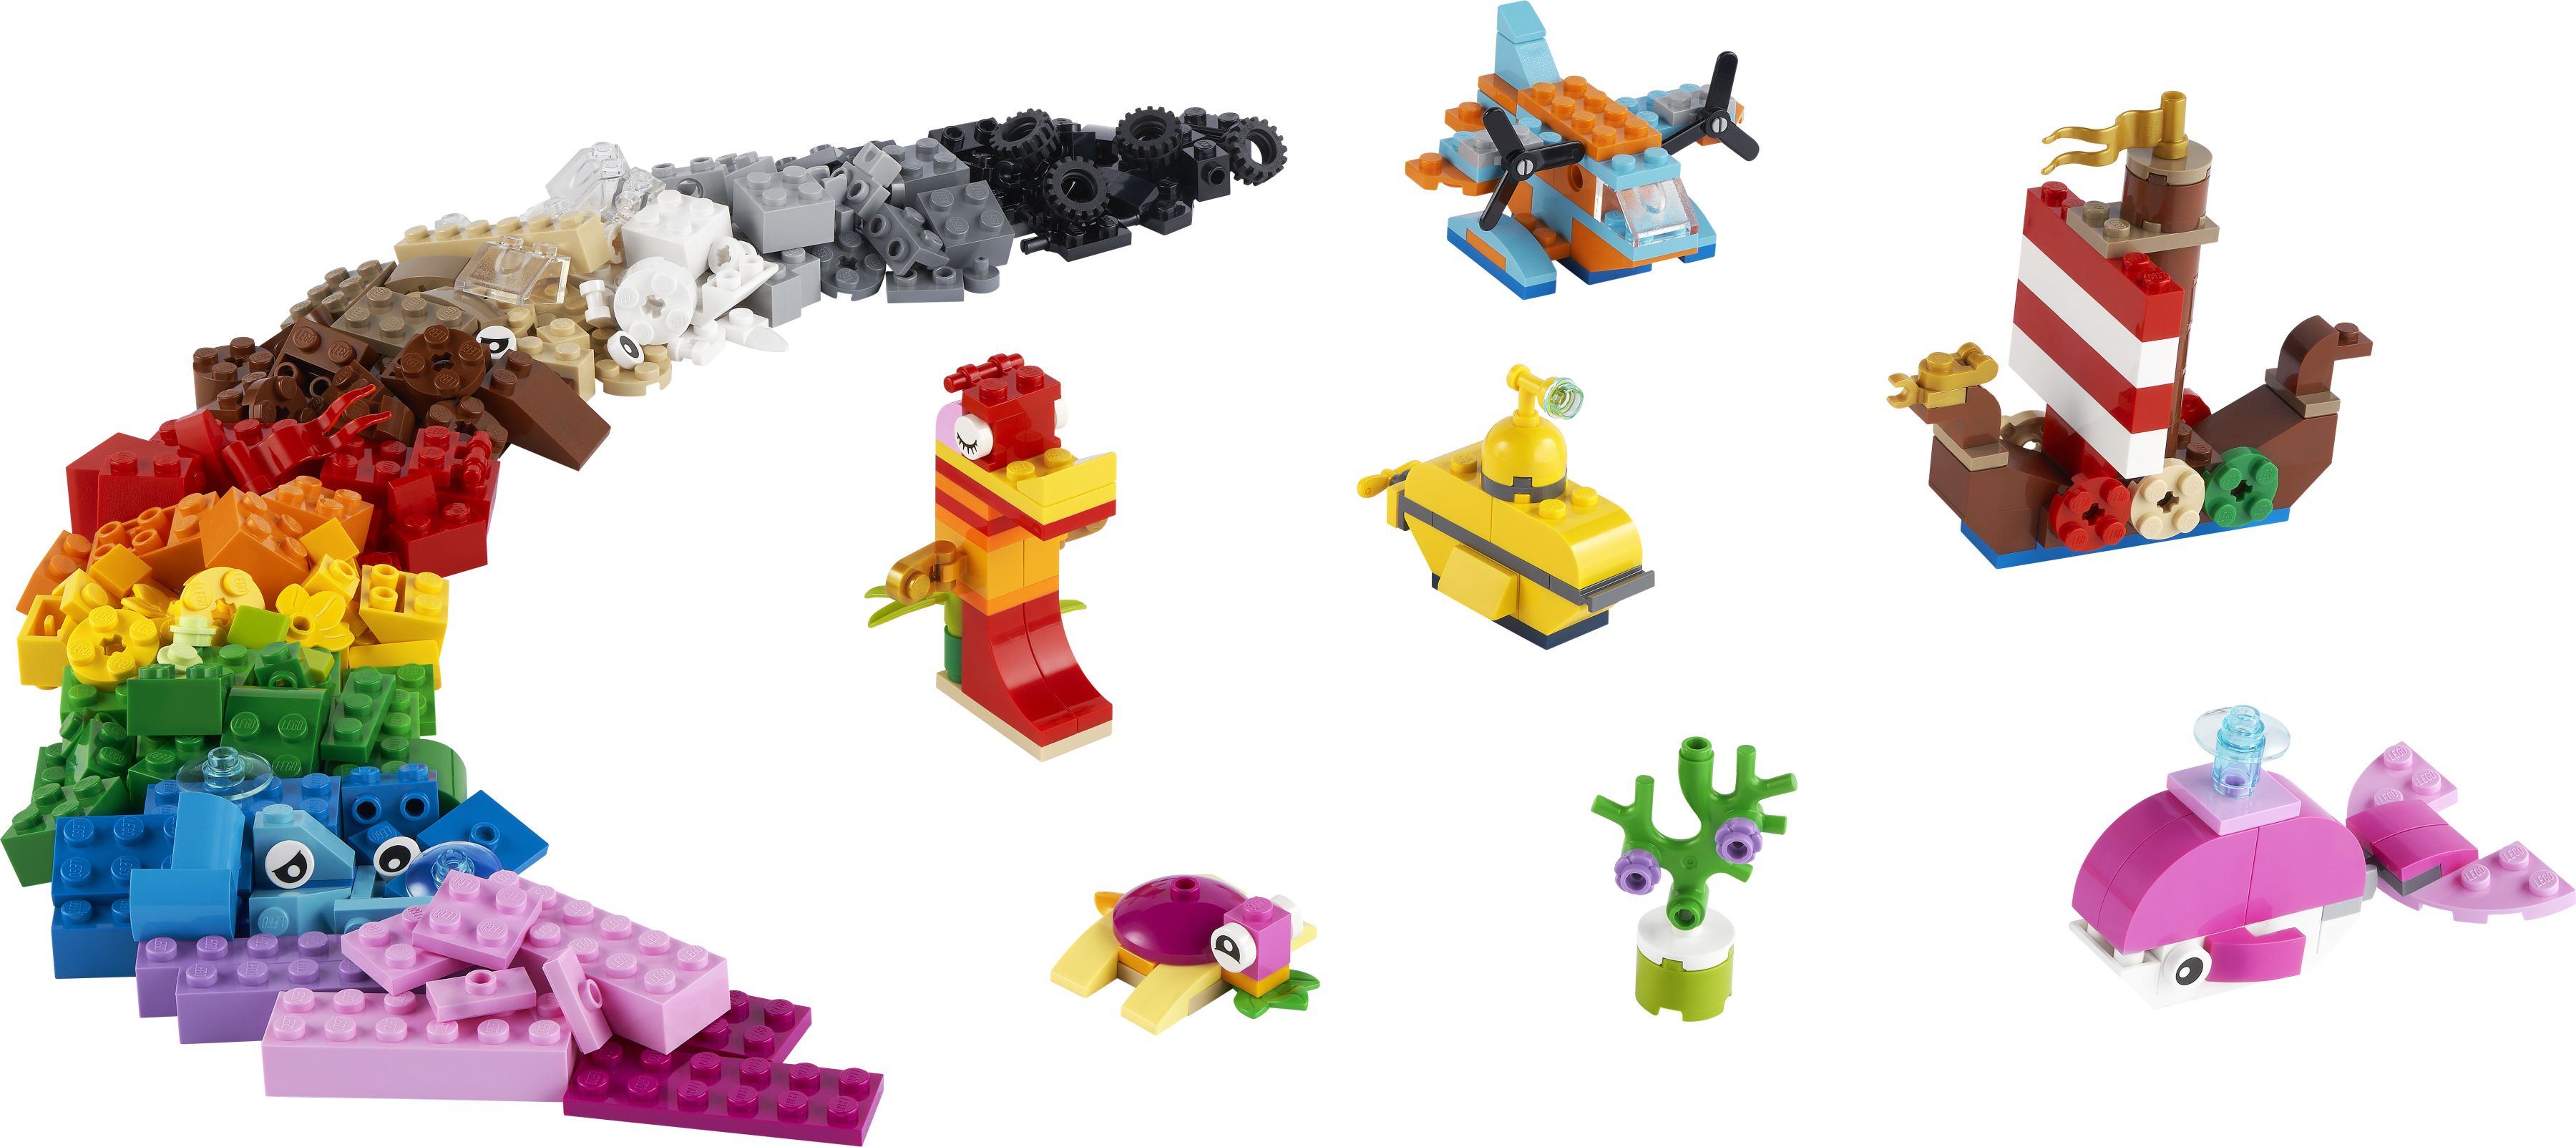 LEGO Classic 11018 Kreativer Meeresspaß